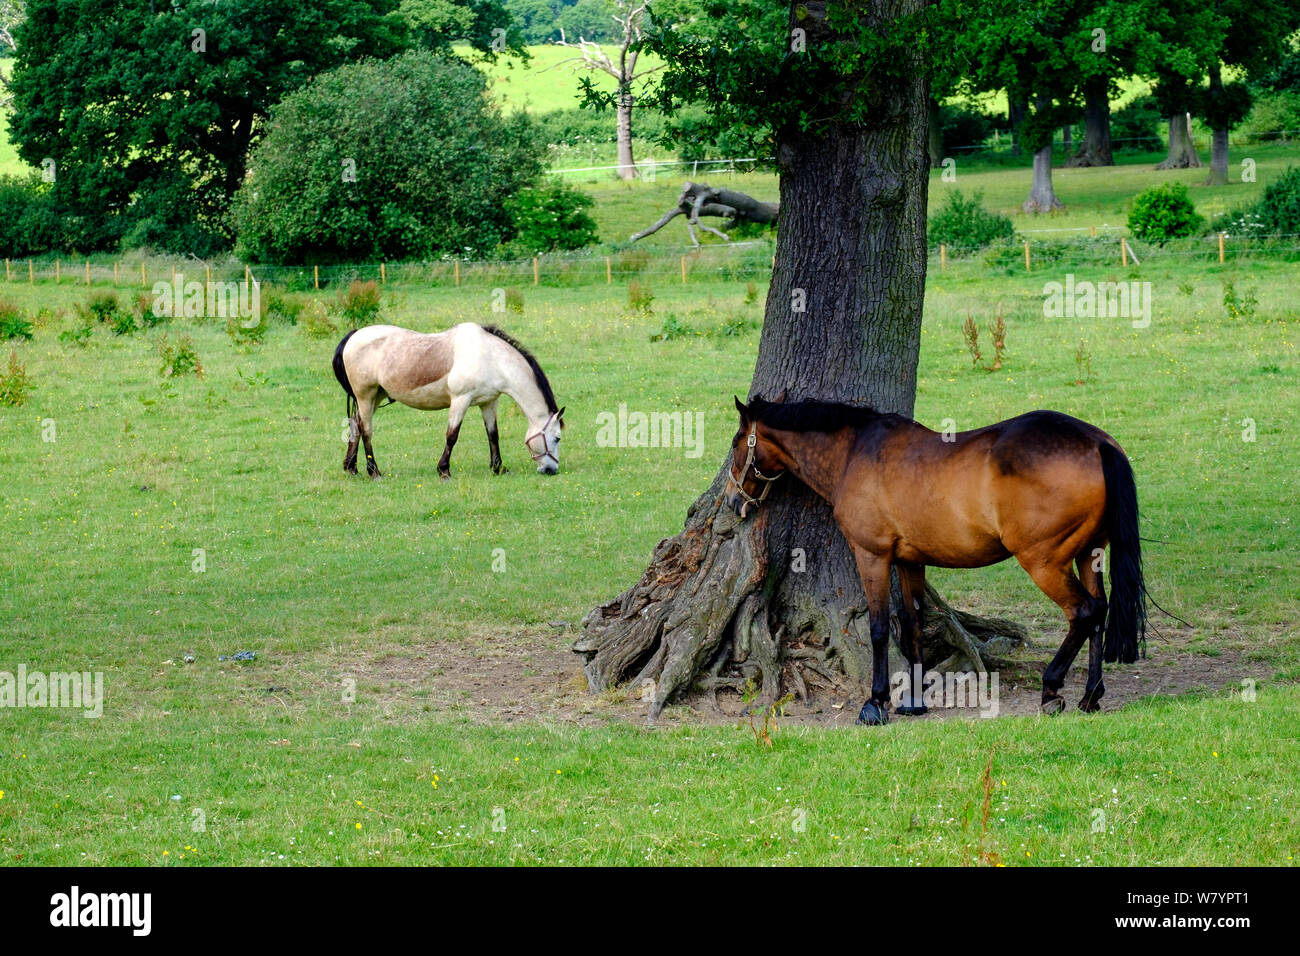 Two horses graze in grassy fields under trees at Bury Farm, Edgwarebury Lane, Edgware, Greater London, UK. Stock Photo